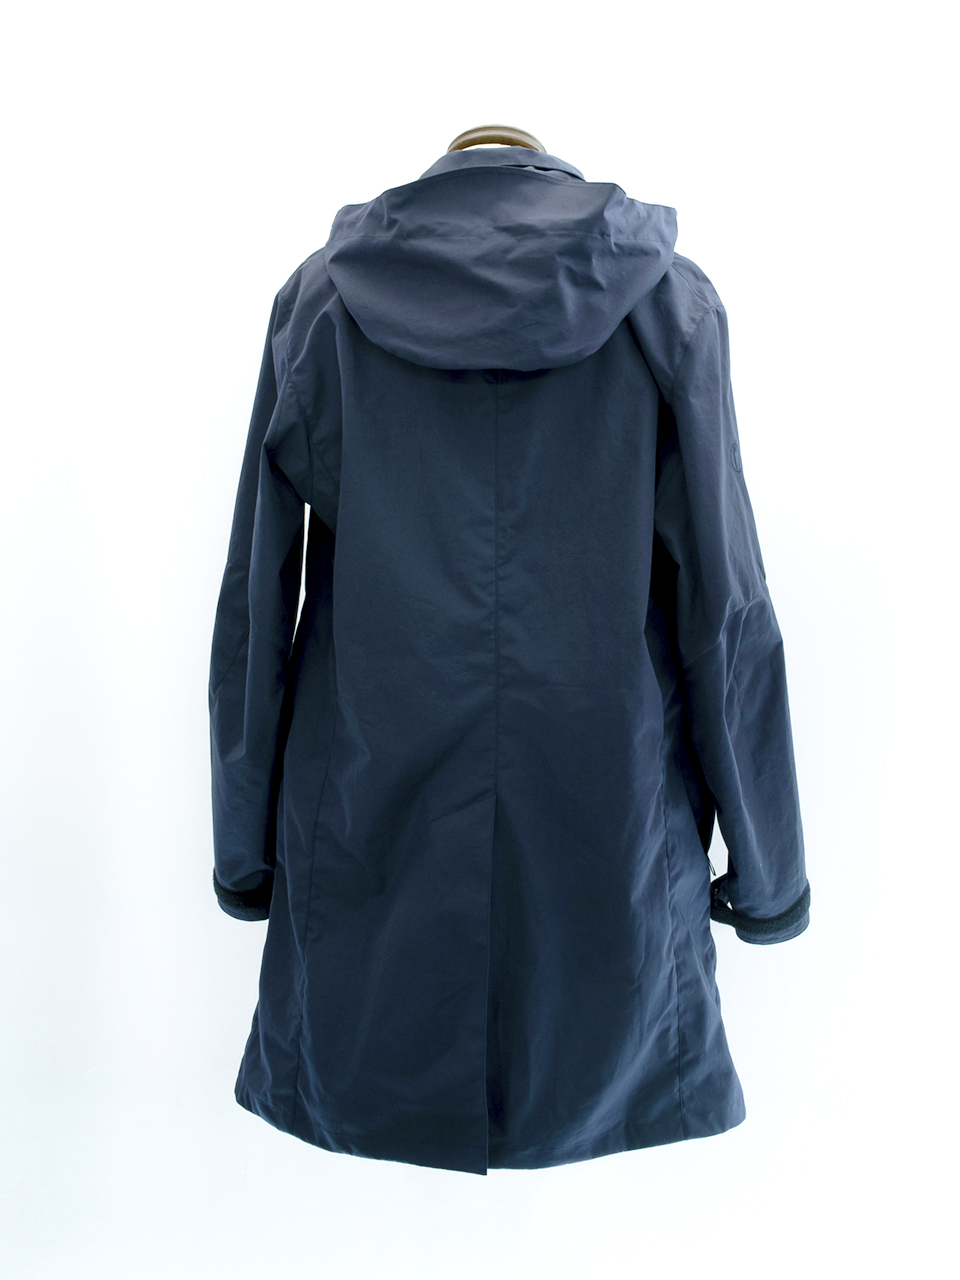 POUTNIK NIGHT coat Ventile® The Urban Traveler by Tilak.